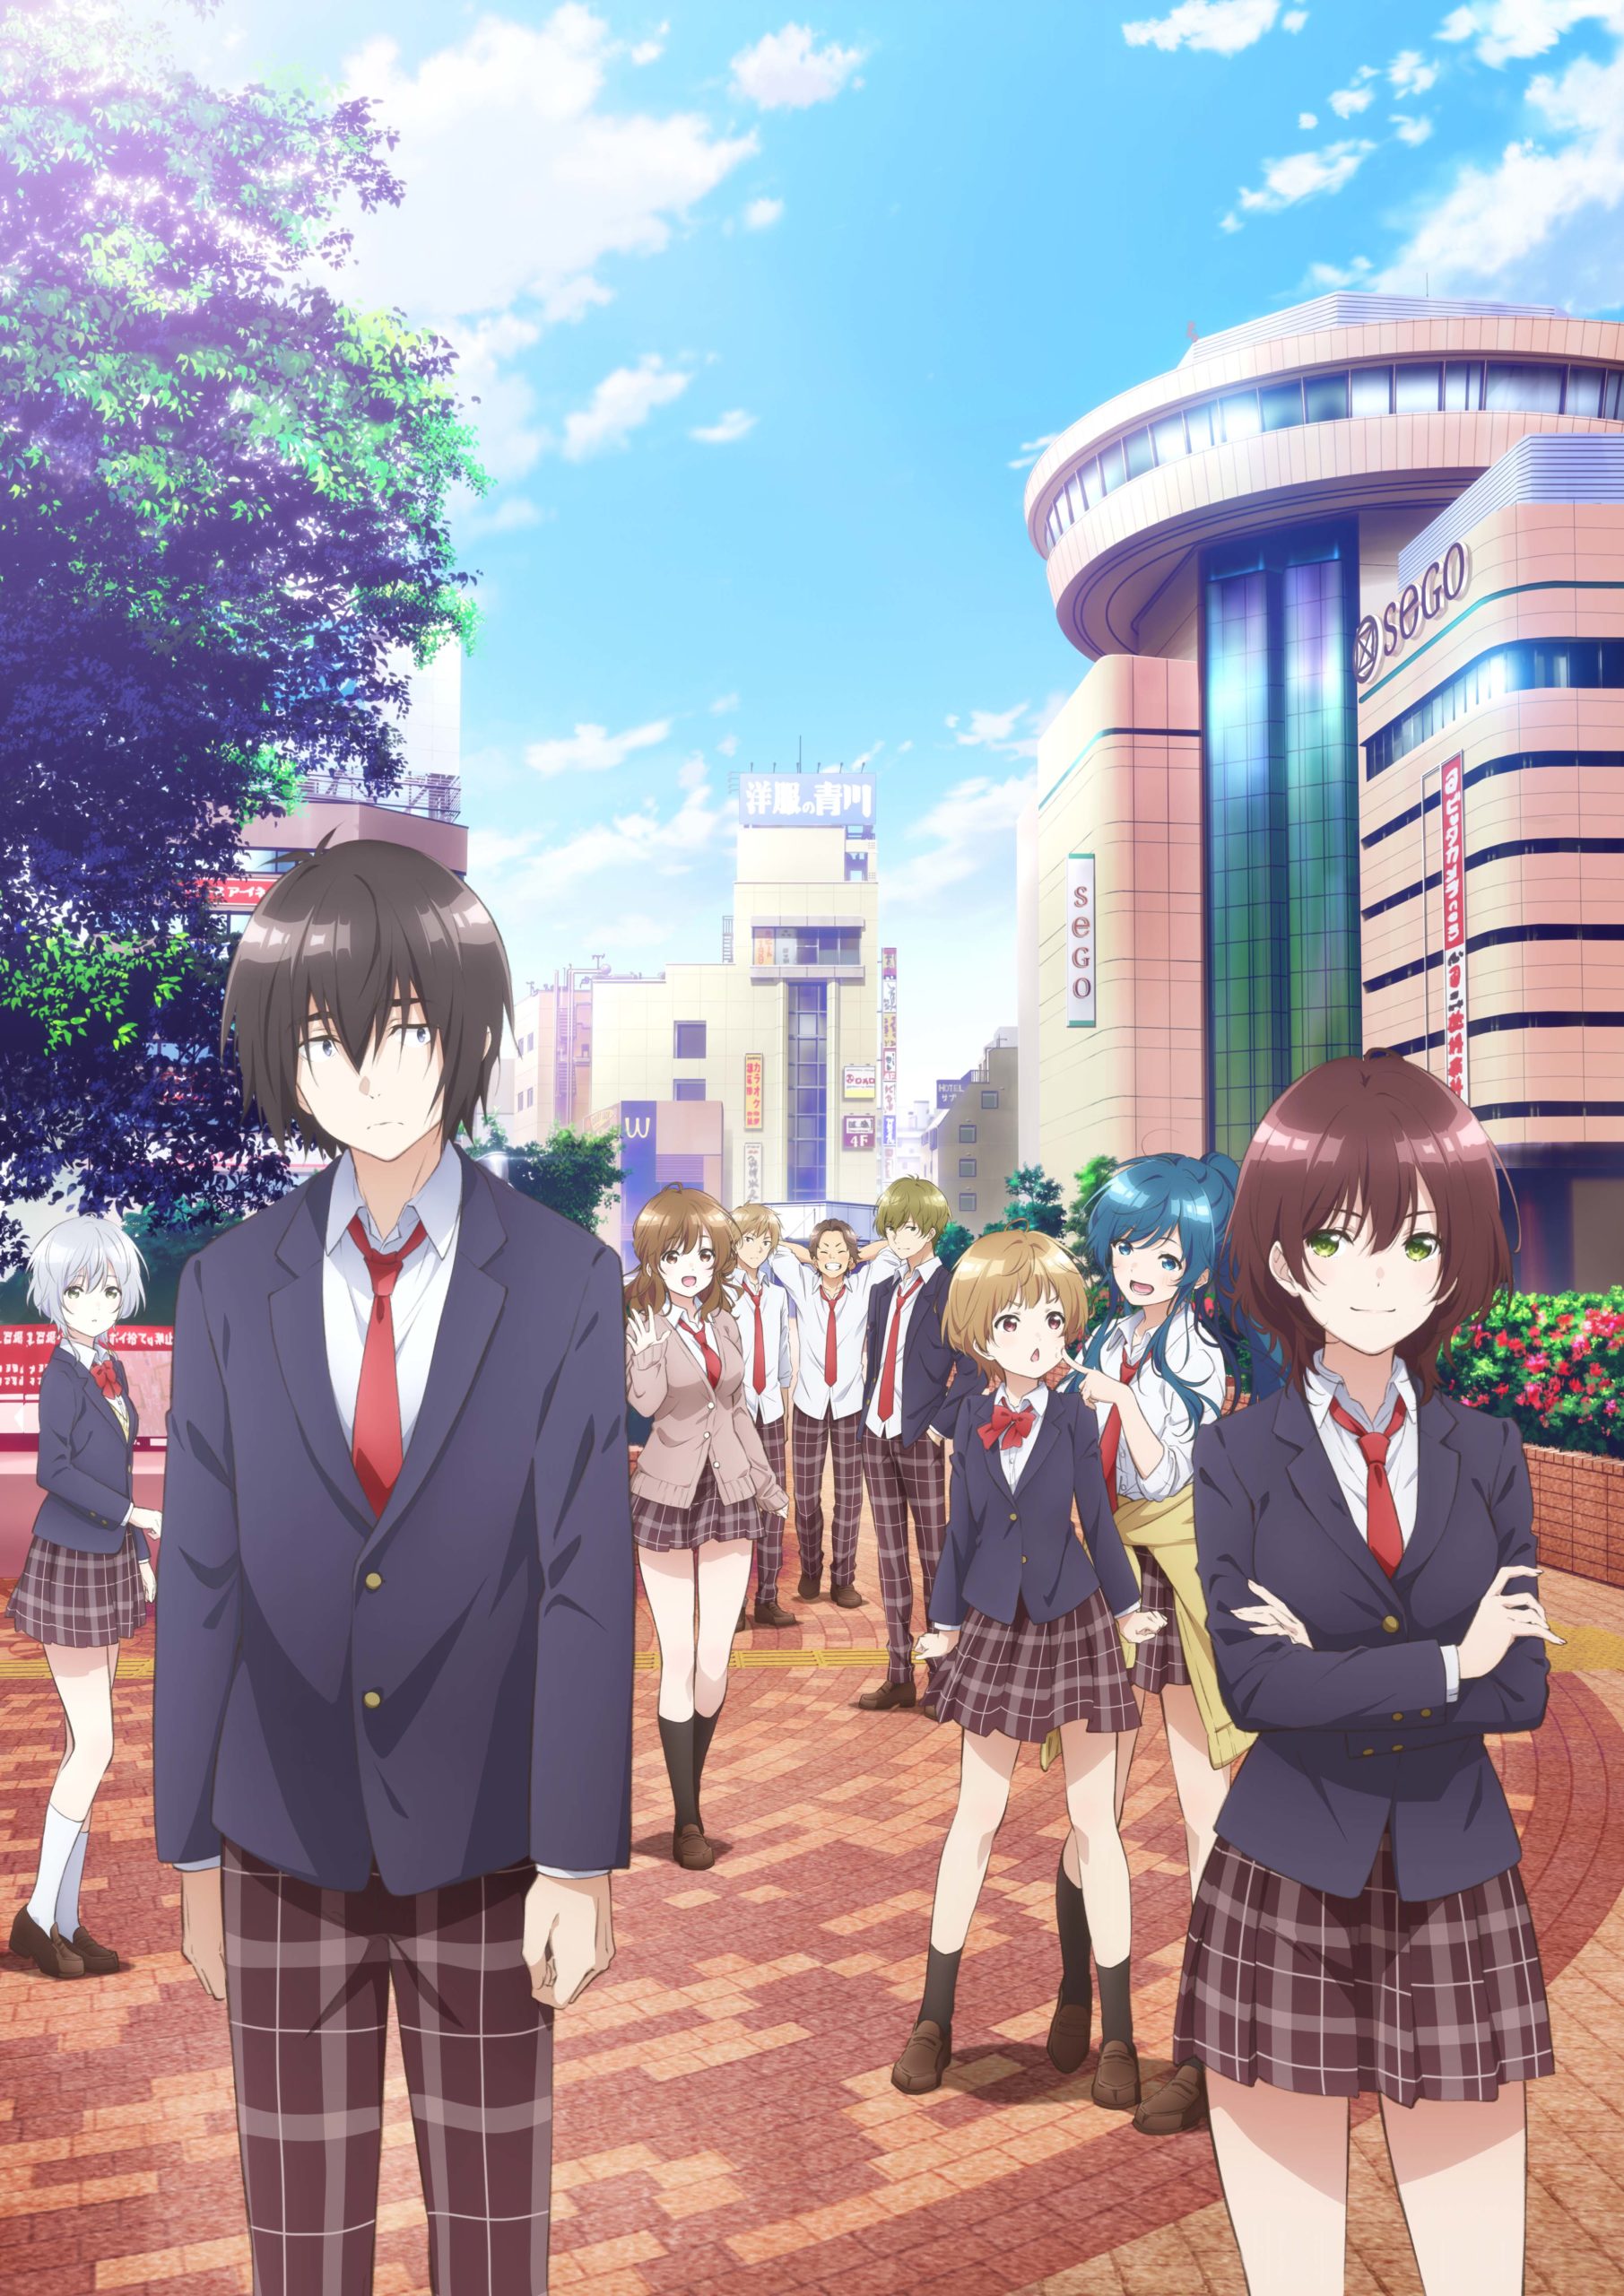 5-Toubun no Hanayome ∬  Anime titles, Anime best friends, Anime romance